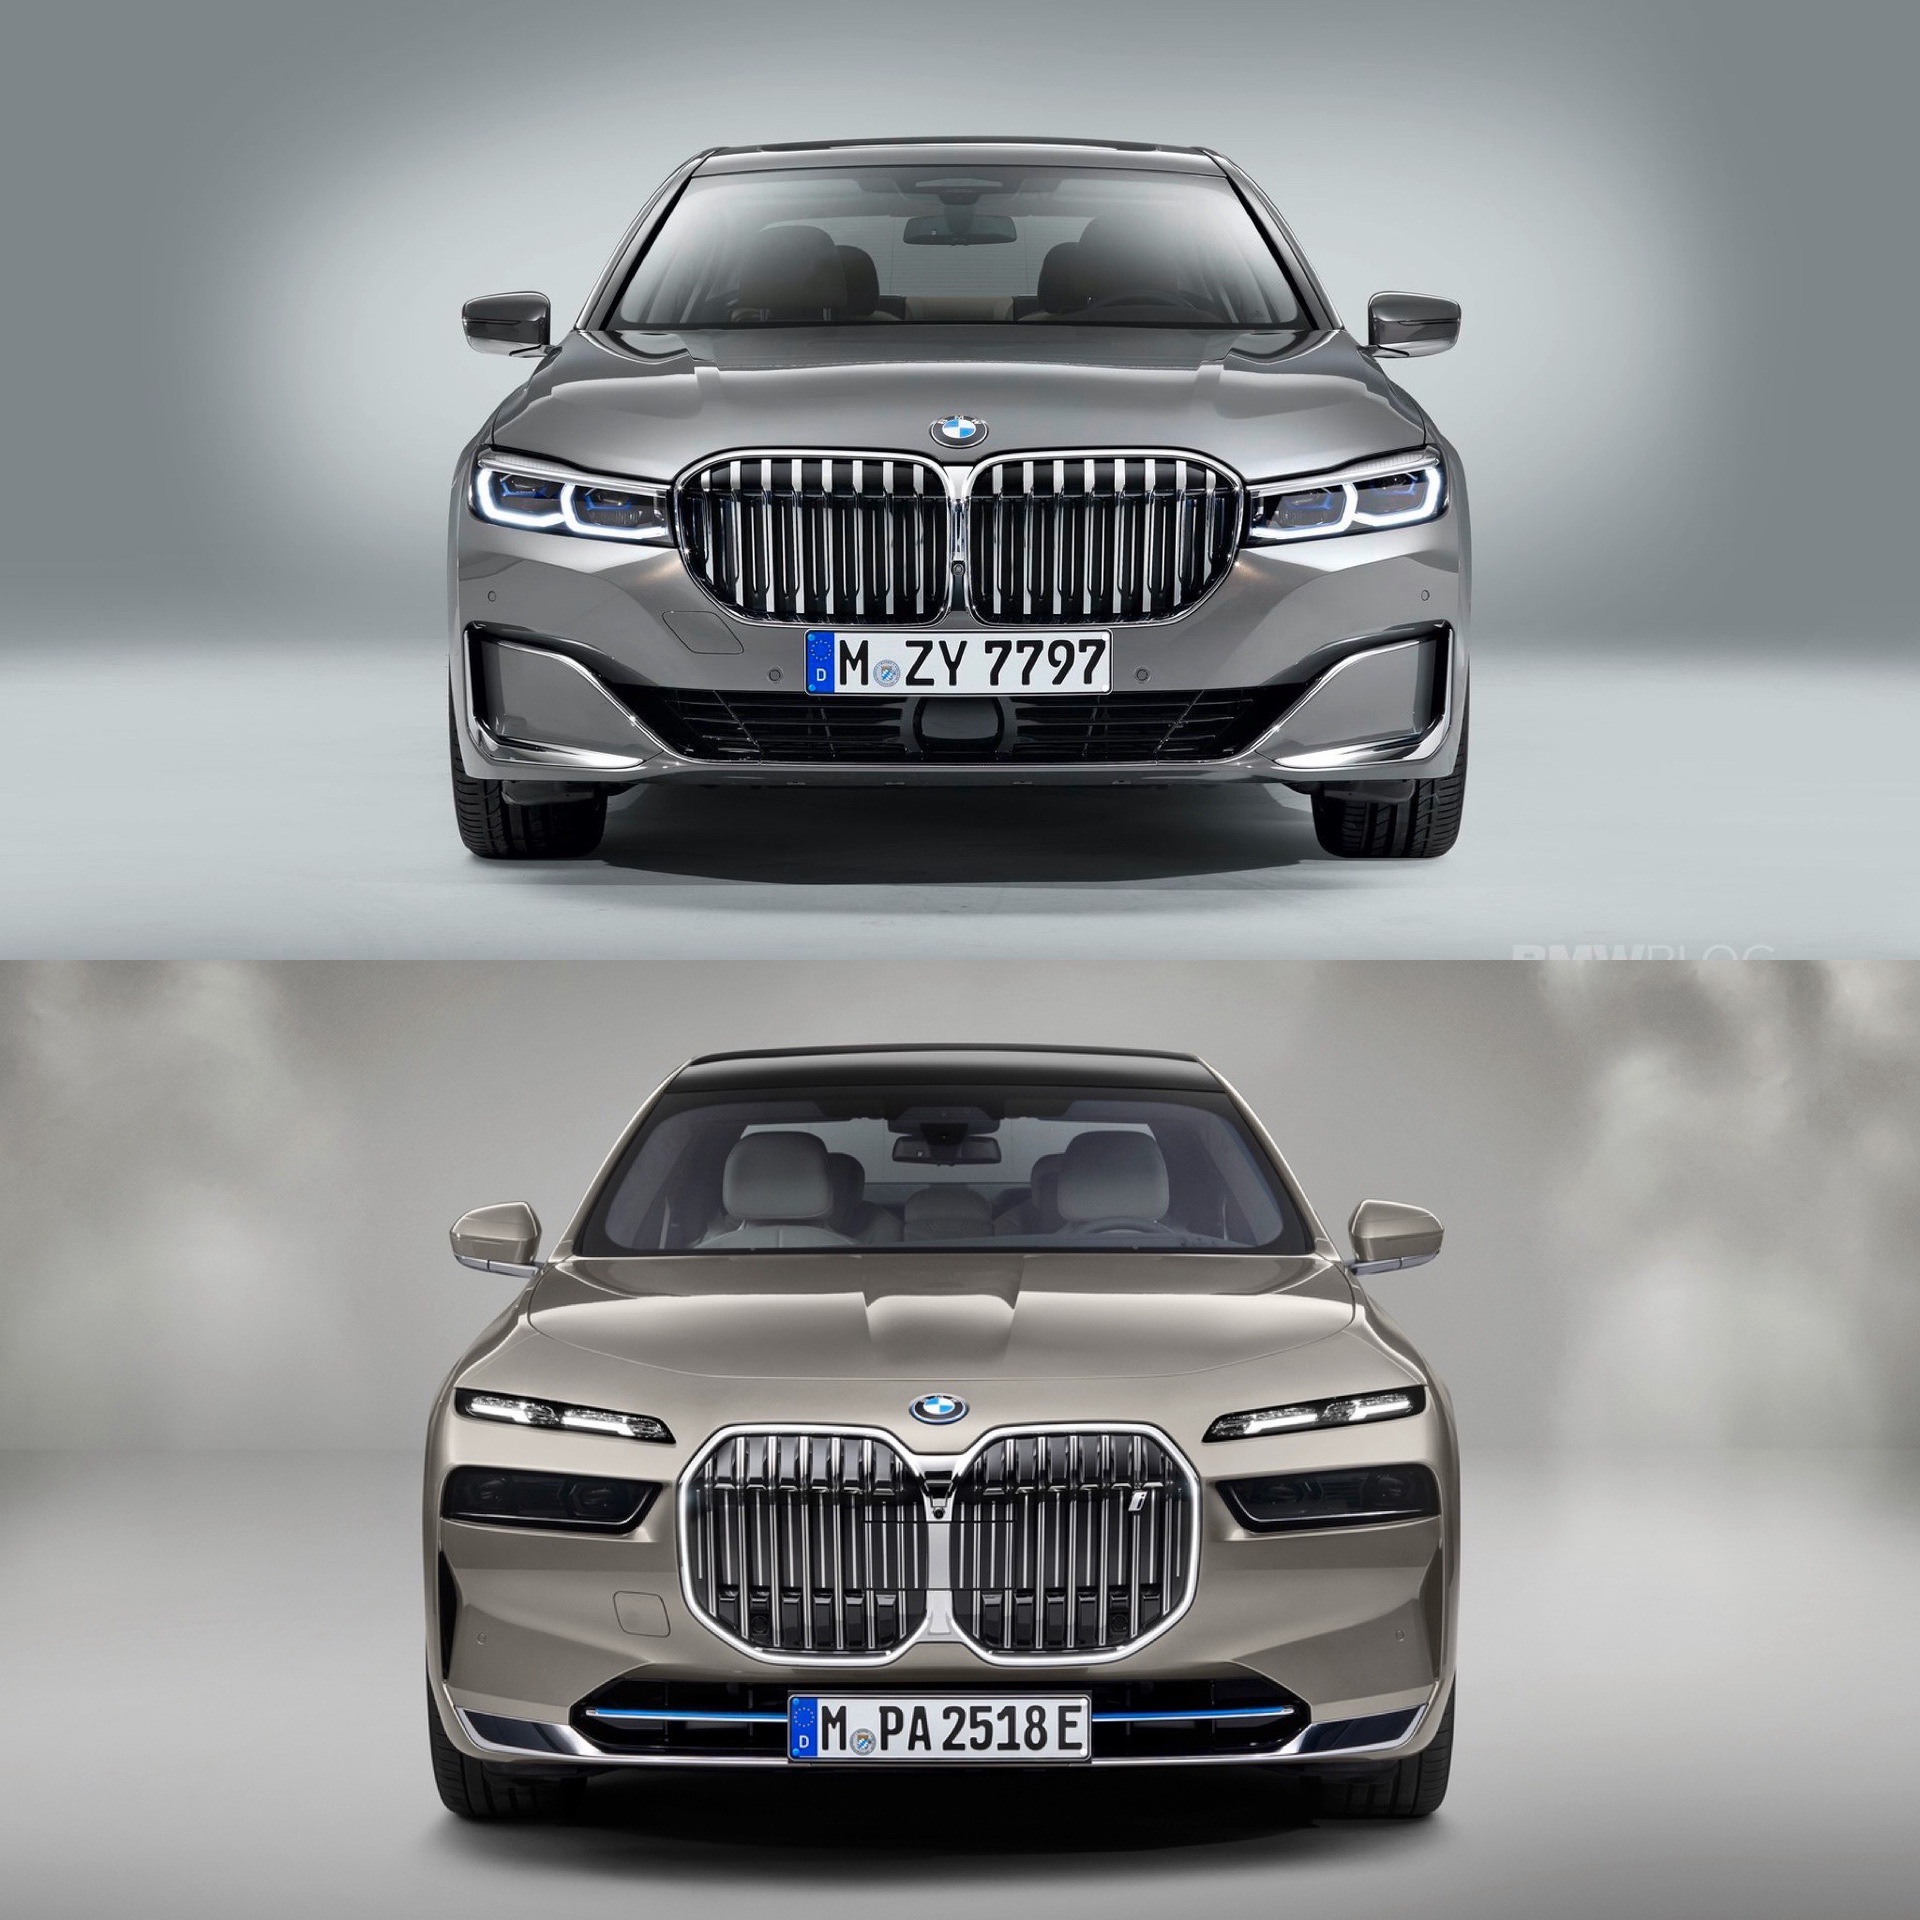 Photo Comparison: New BMW 7 Series vs Old 7 Series